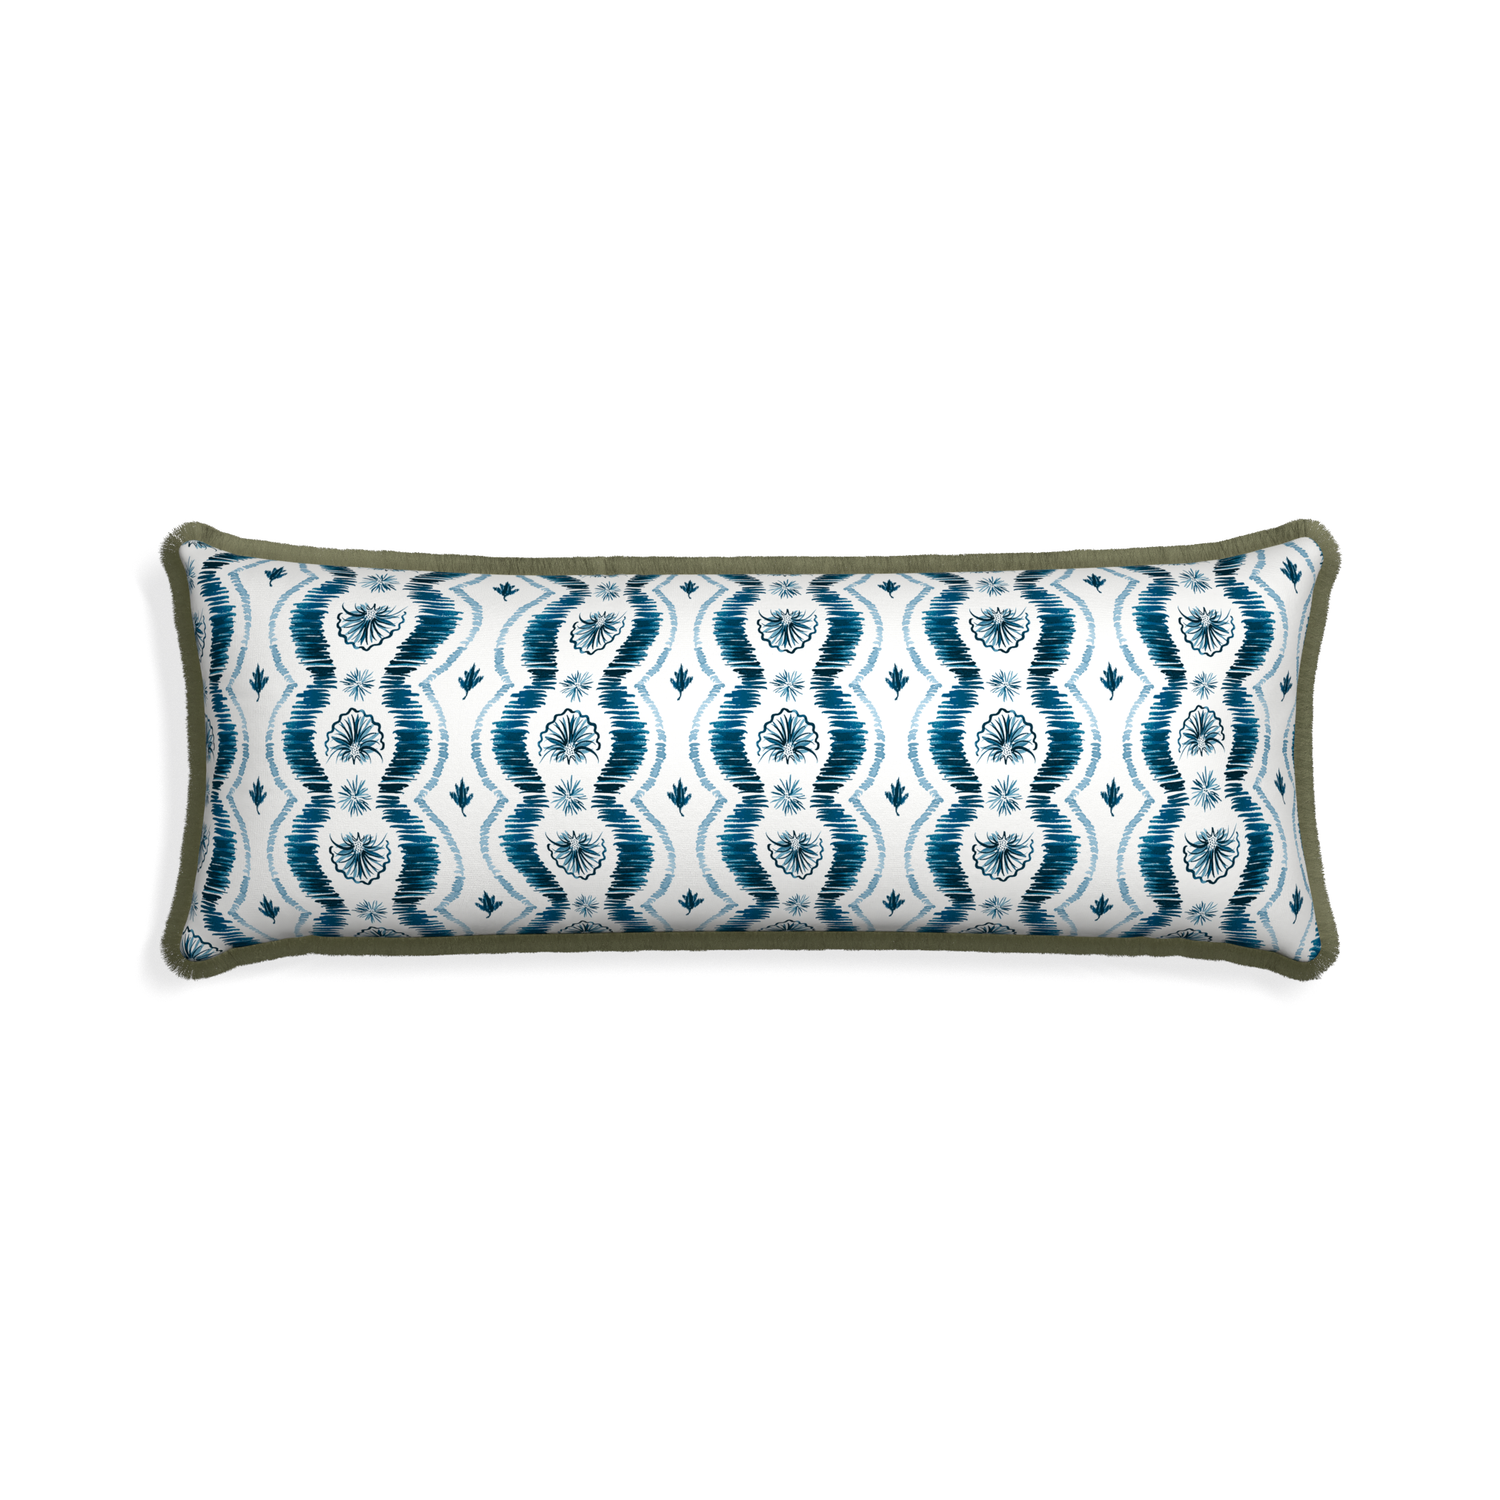 Xl-lumbar alice custom pillow with sage fringe on white background